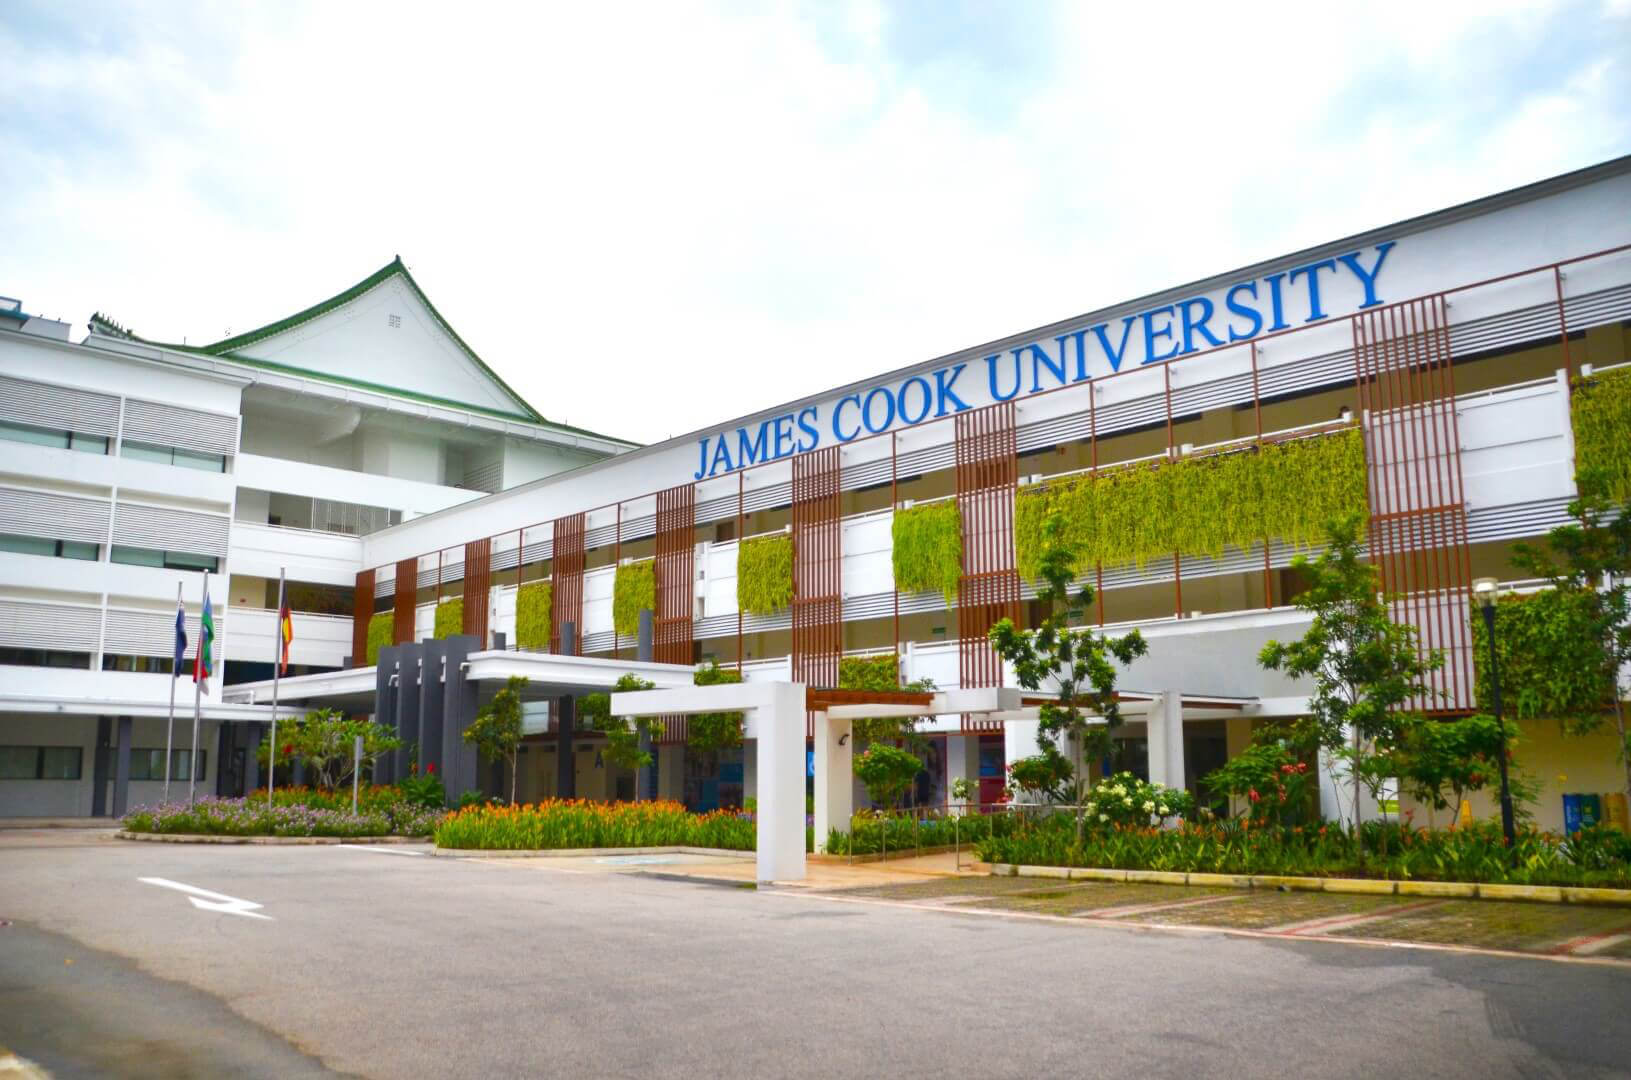 James Cook University Singapore Campus 5